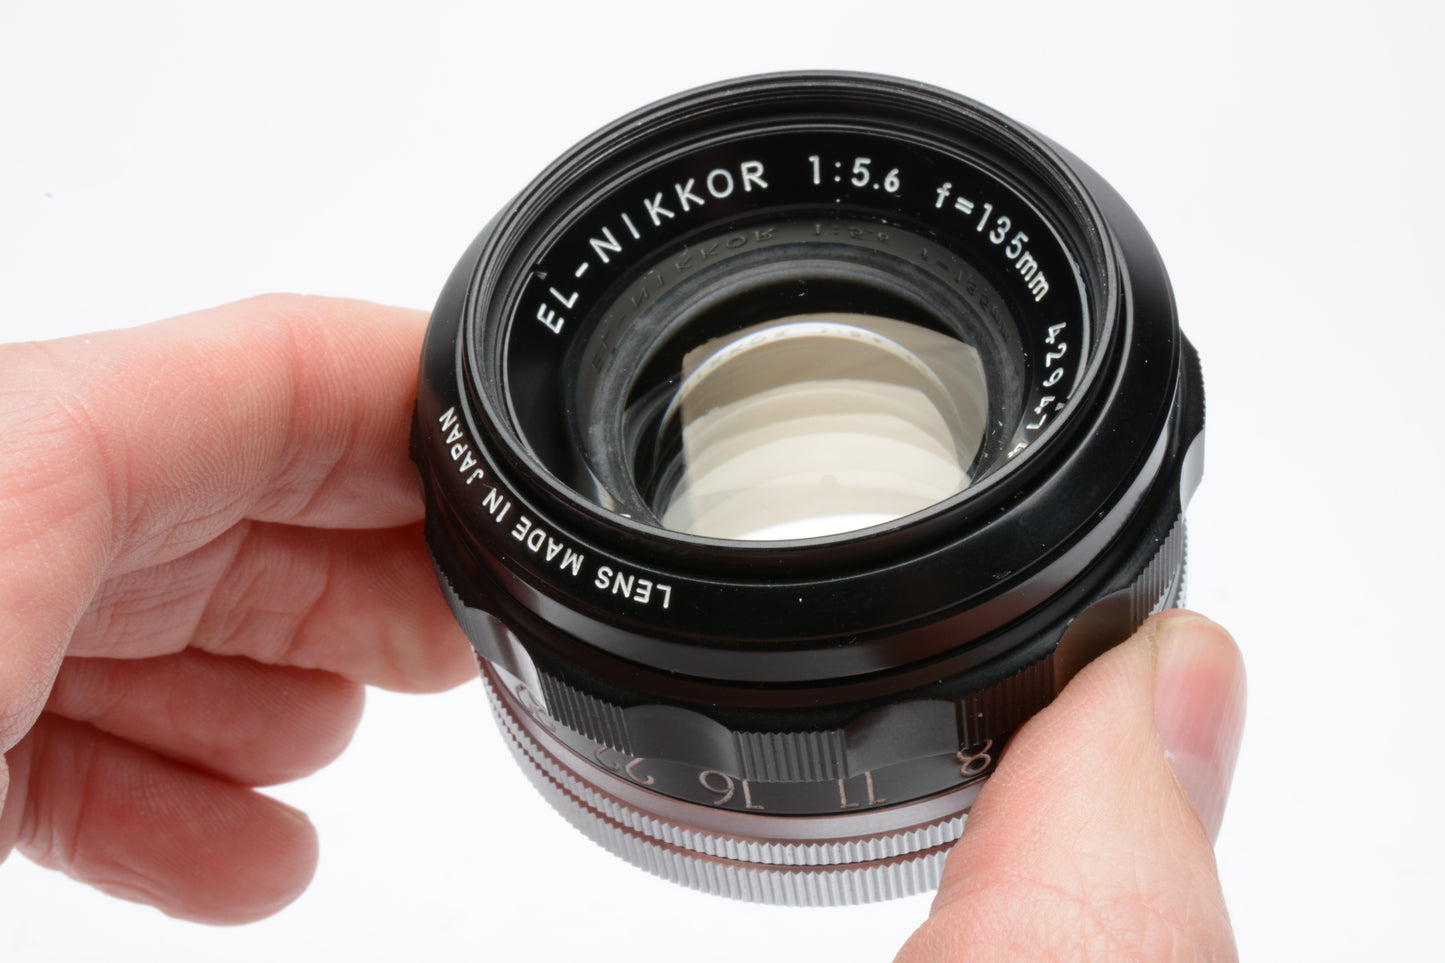 Nikon EL Nikkor 135mm f5.6 enlarging lens in jewel case + cap